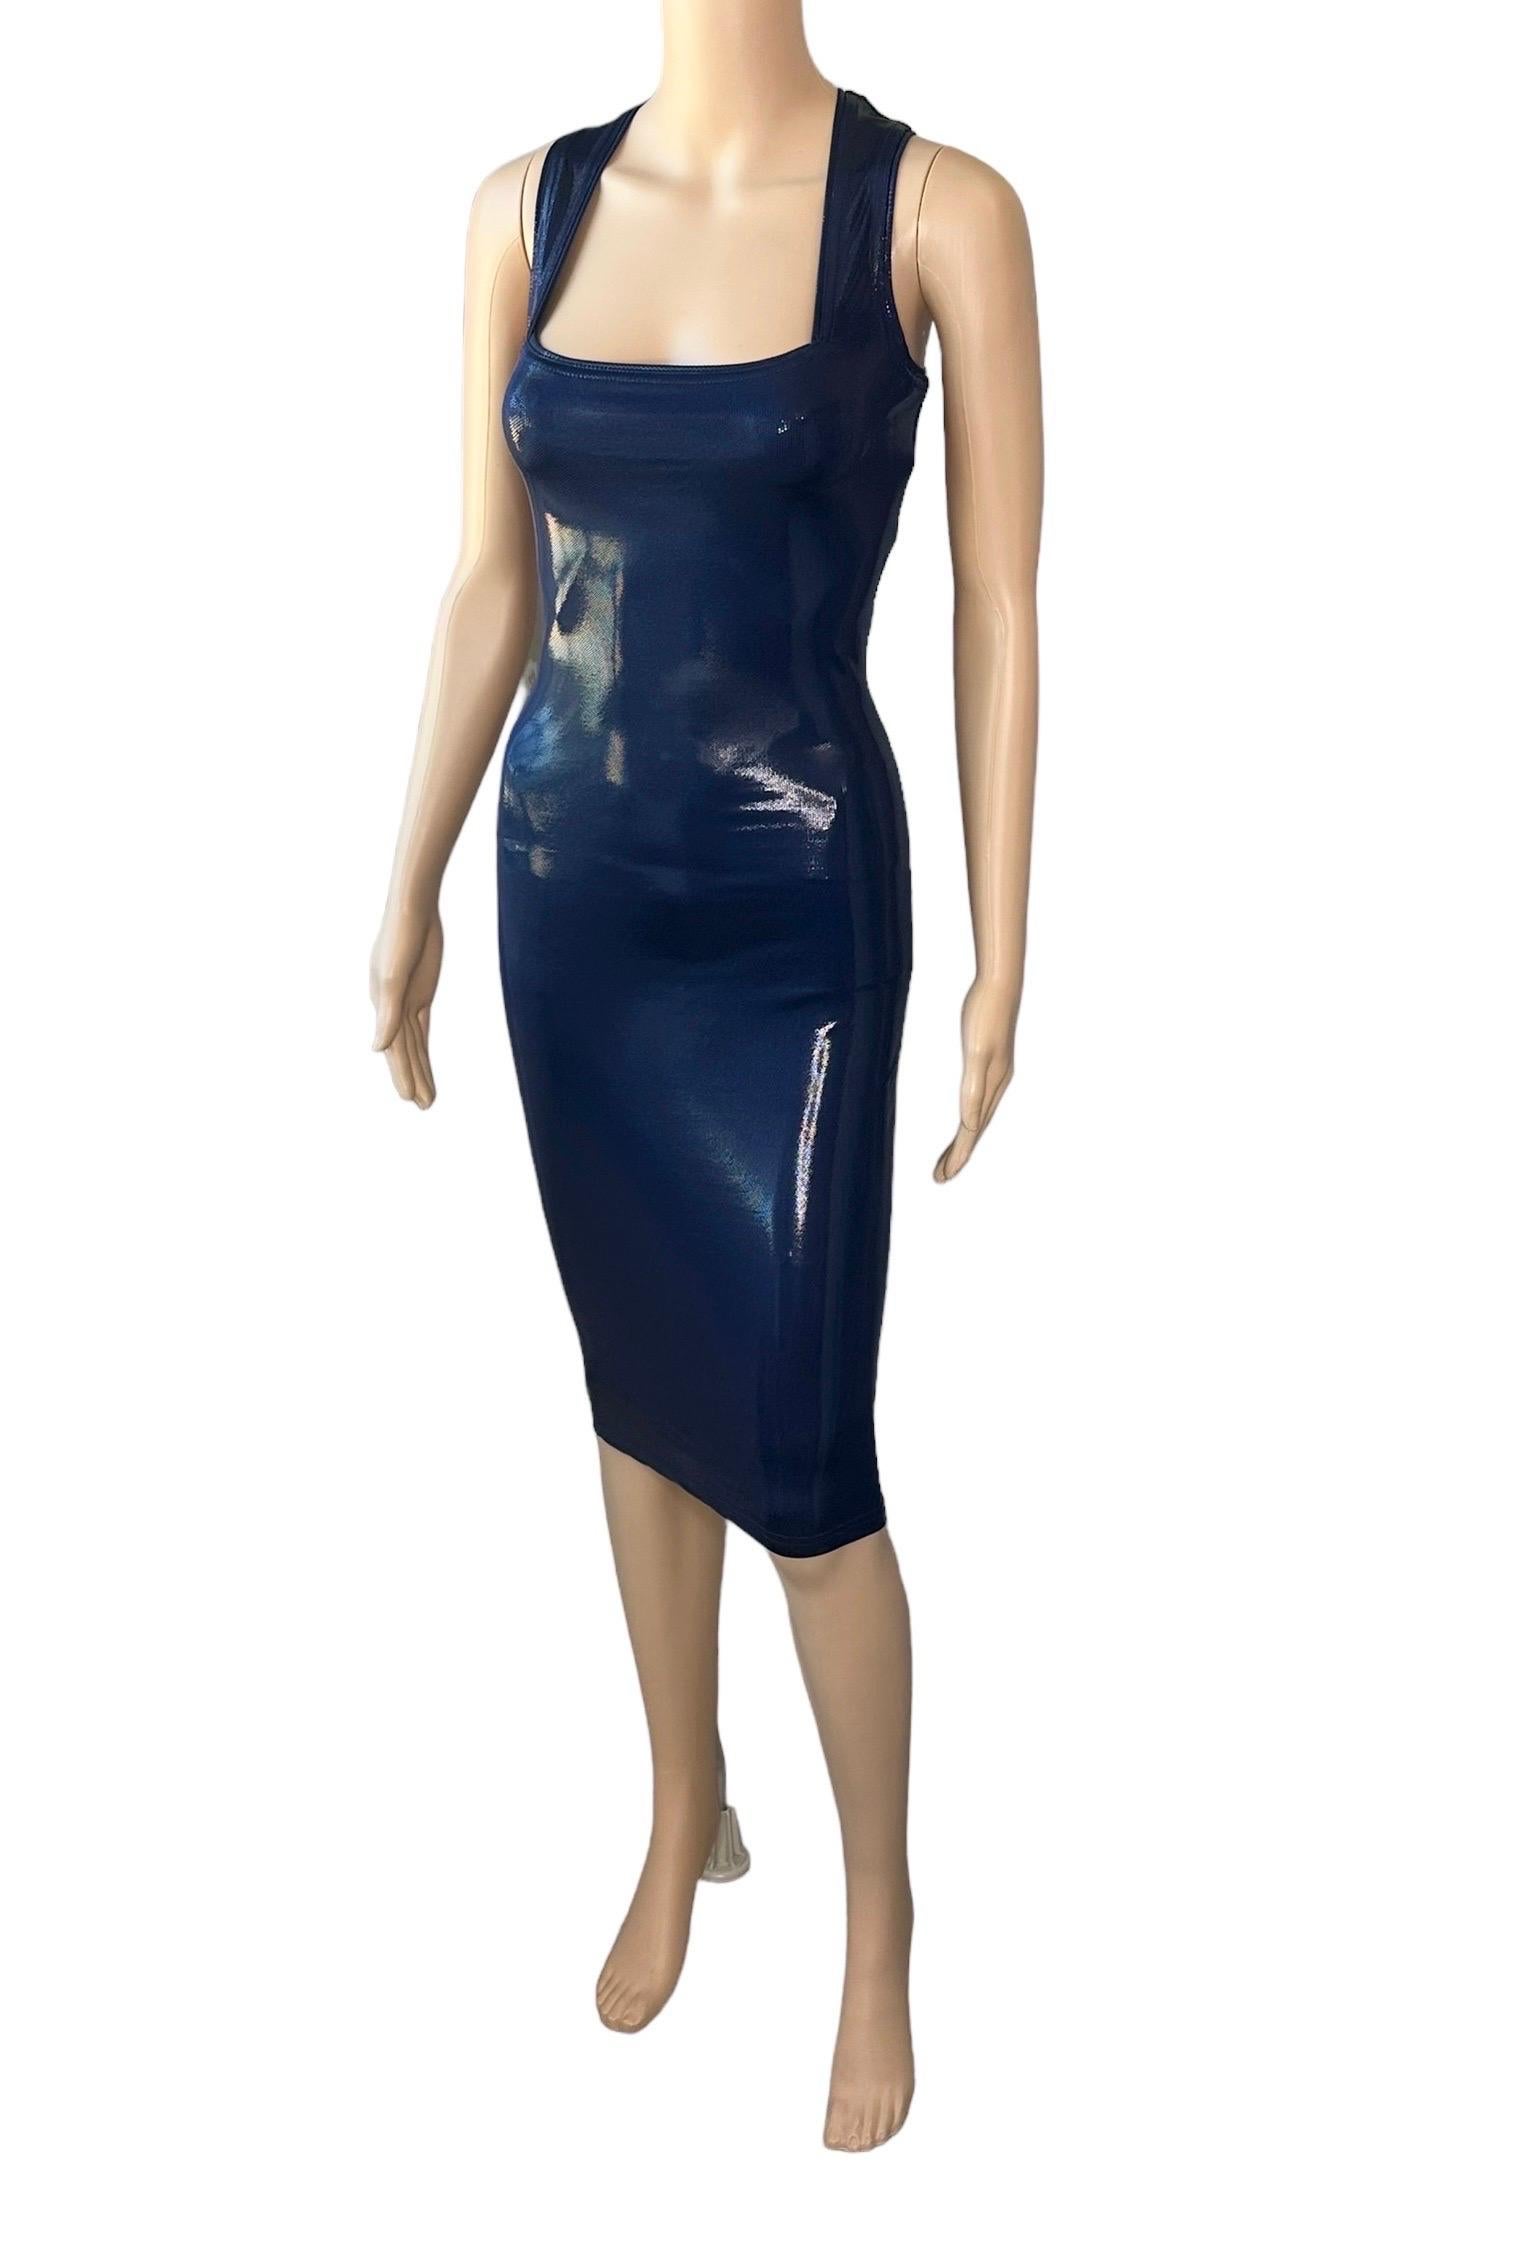 Gianni Versace c. 1994 Vintage Wet Look Stretch Bodycon Navy Blue Midi Dress 6